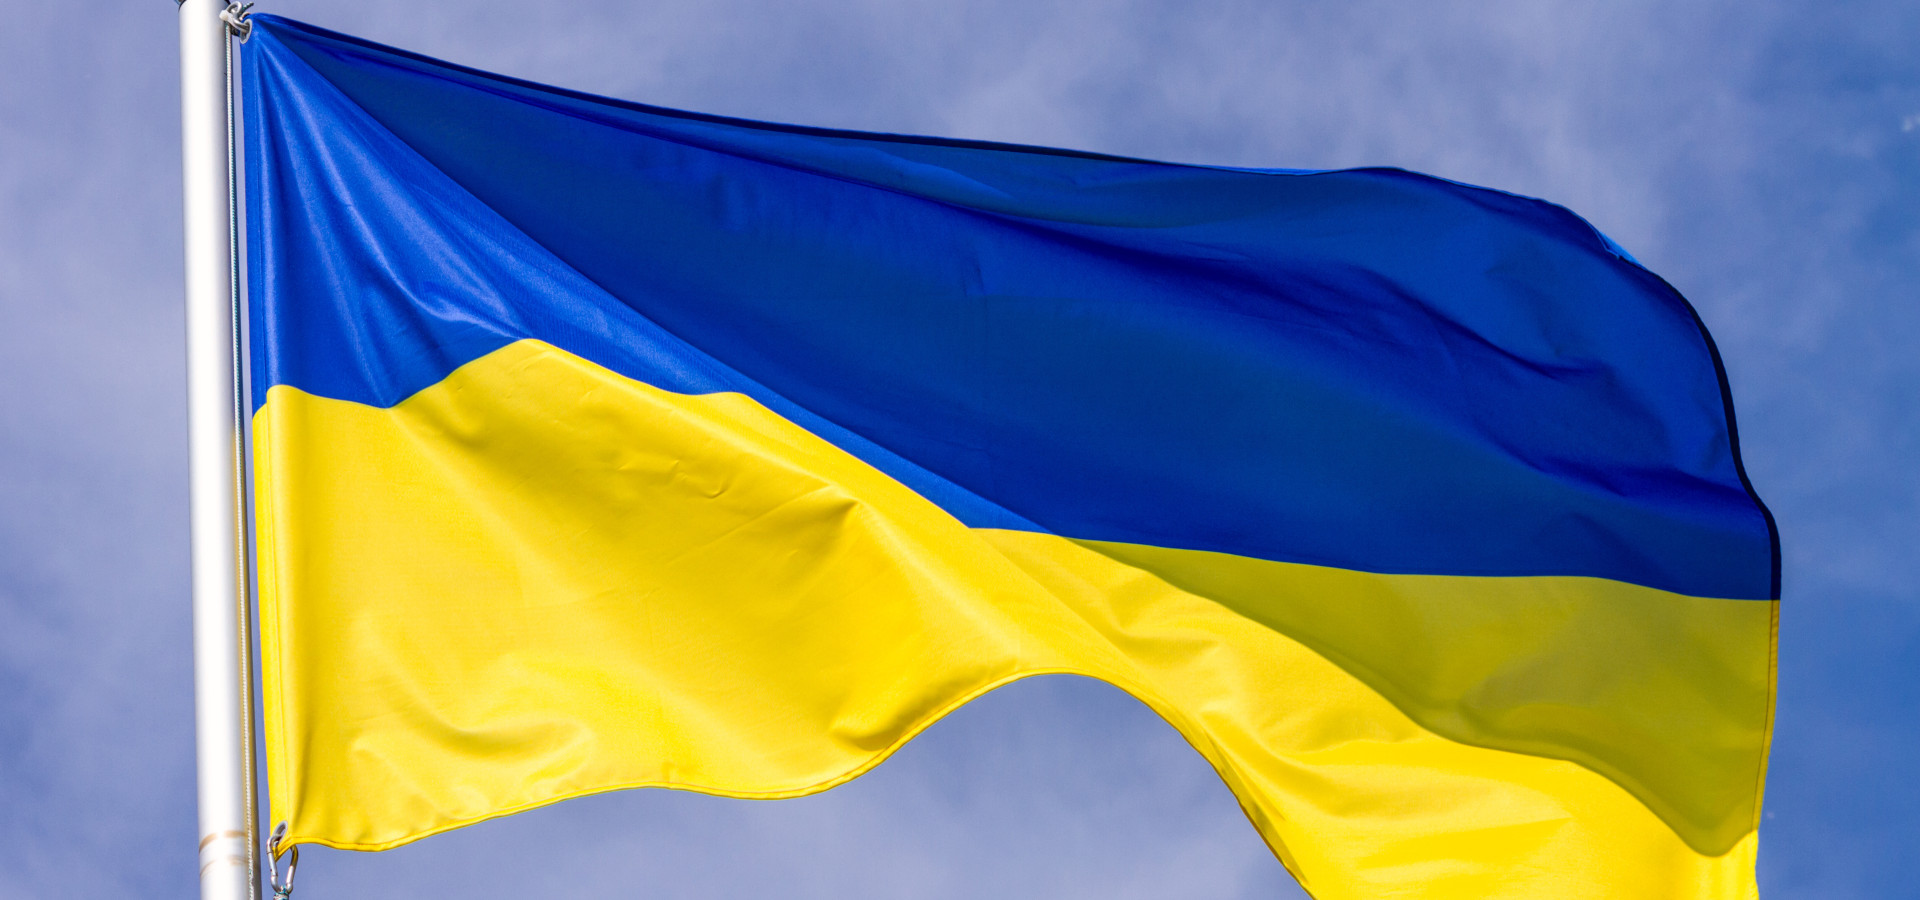 Ukrainian national flag waving in the wind